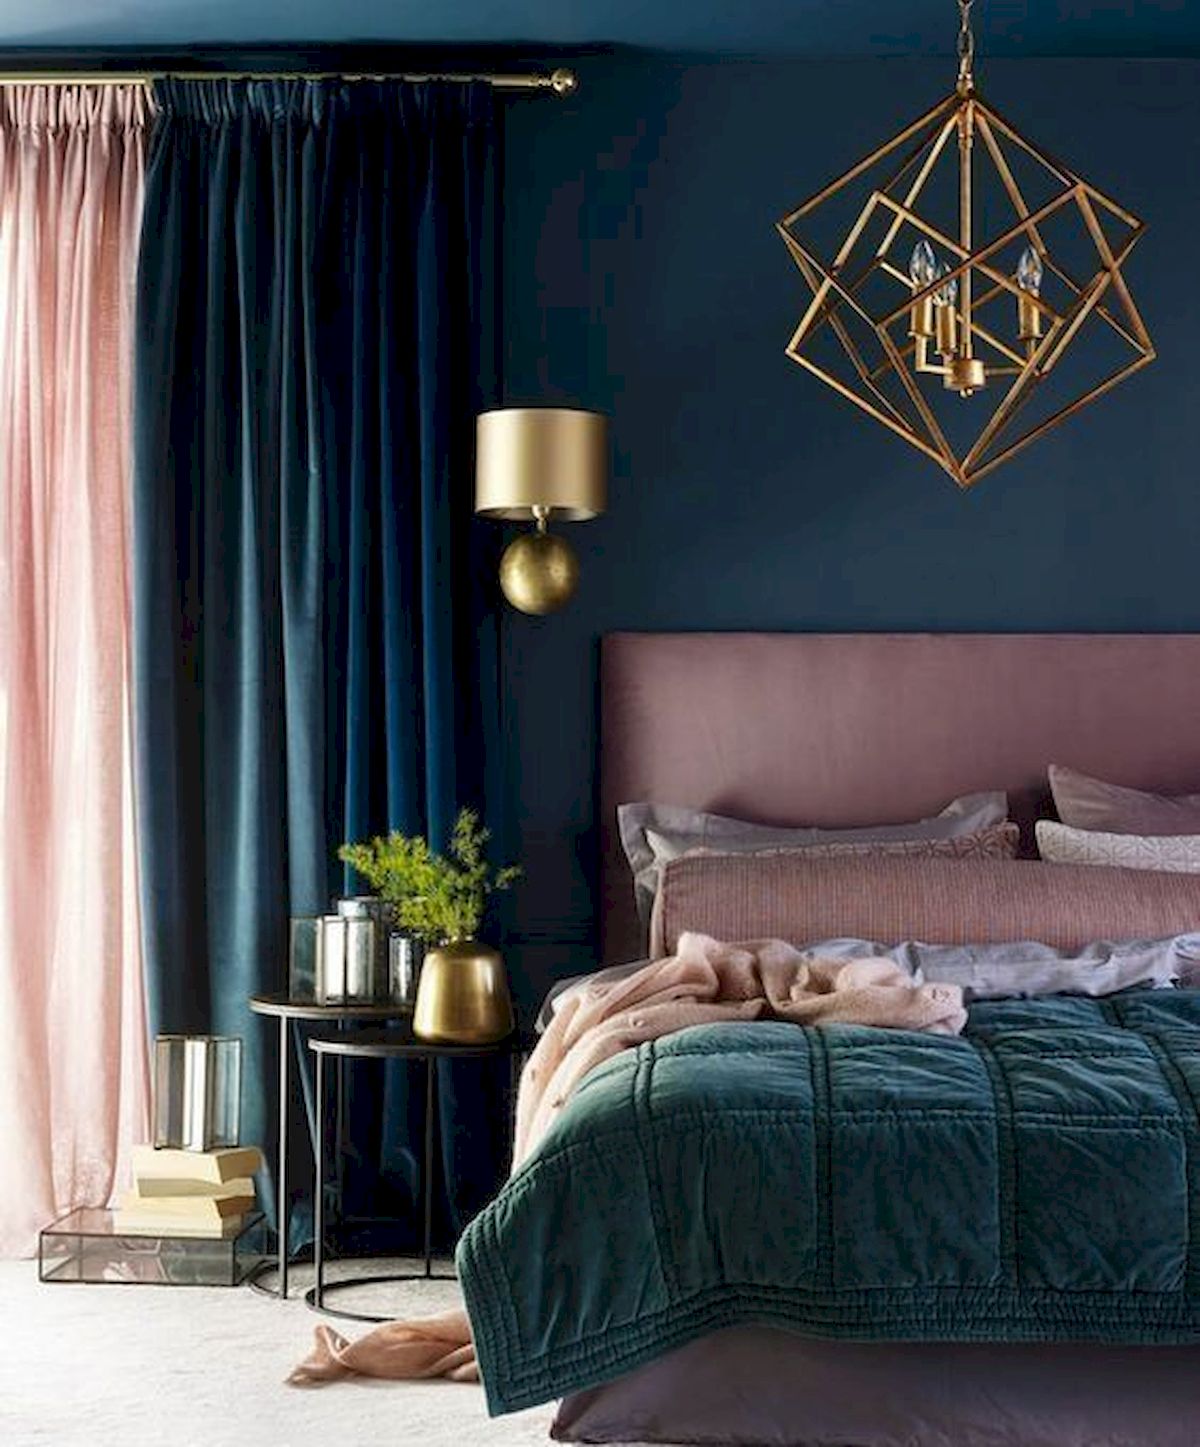 36 Beautiful Wall Bedroom Decor Ideas That Unique (15)